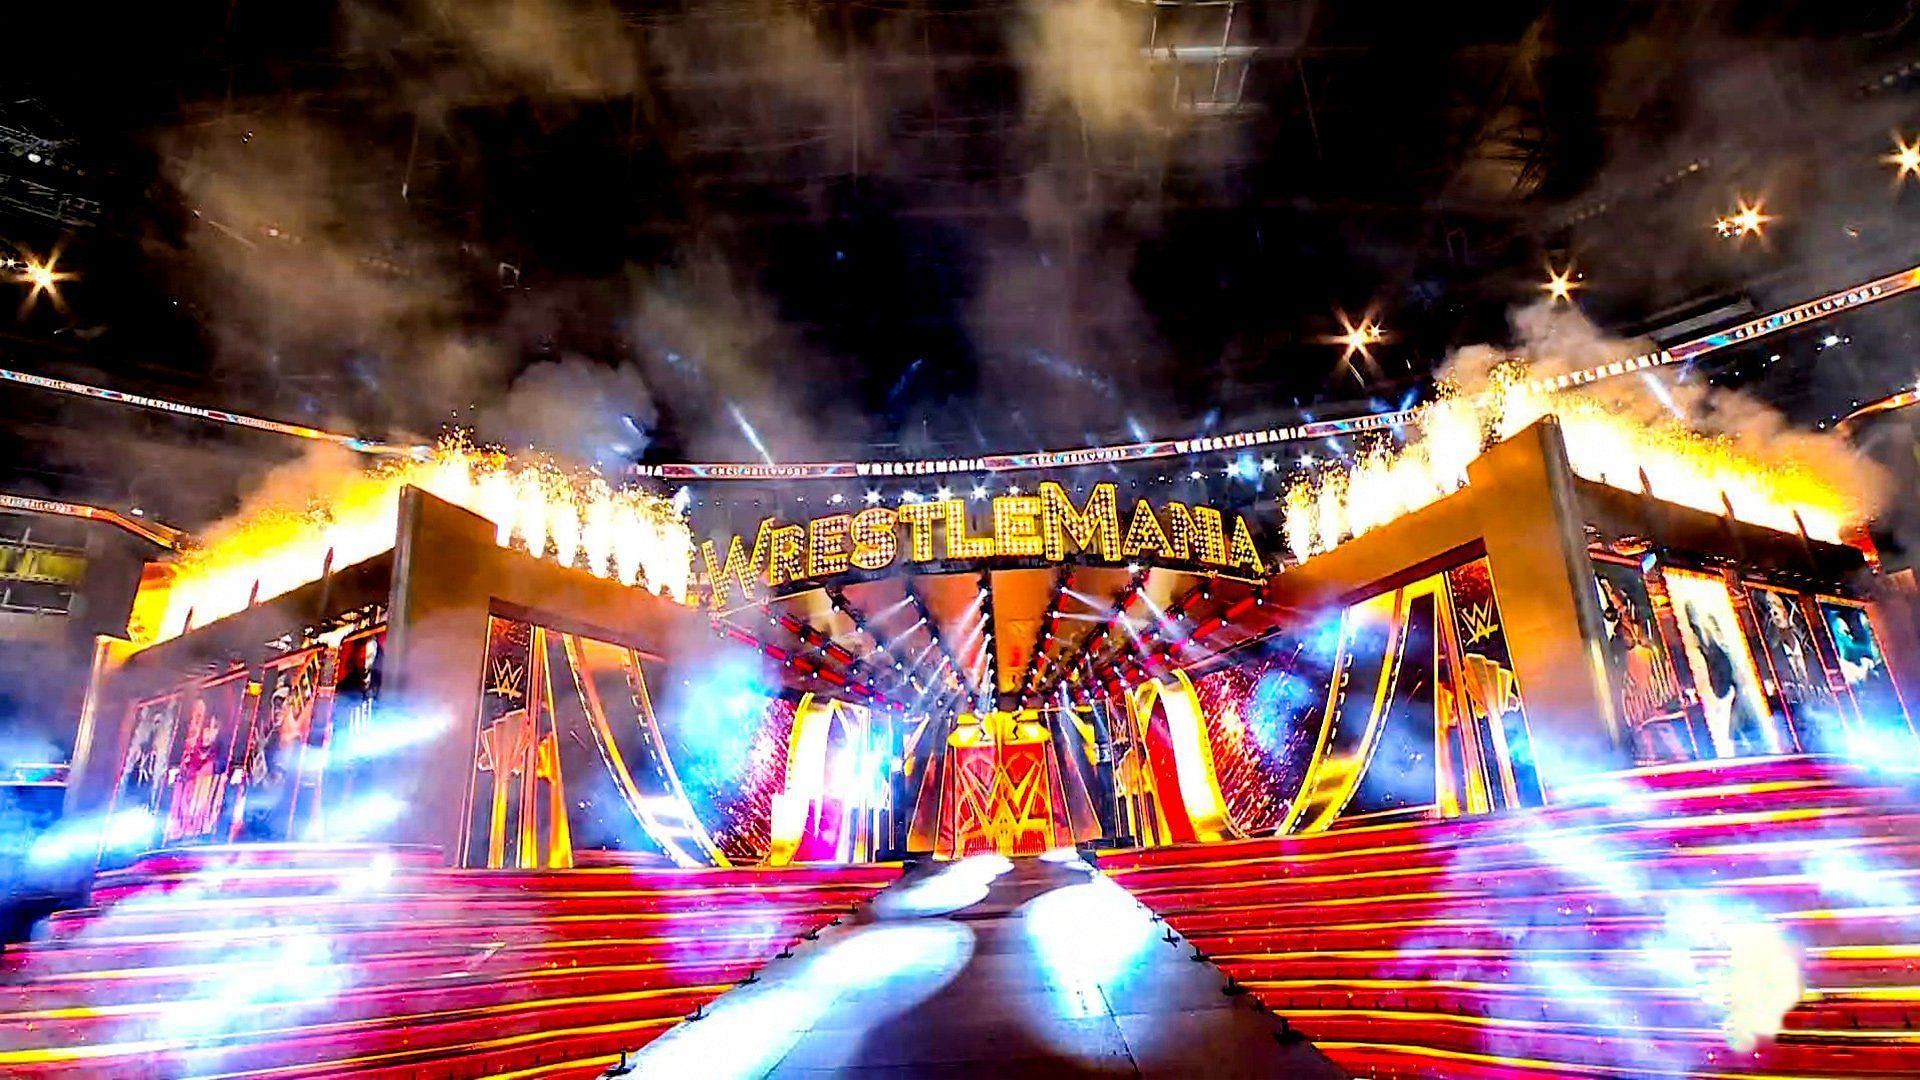 The WWE WrestleMania stage at So-Fi Stadium